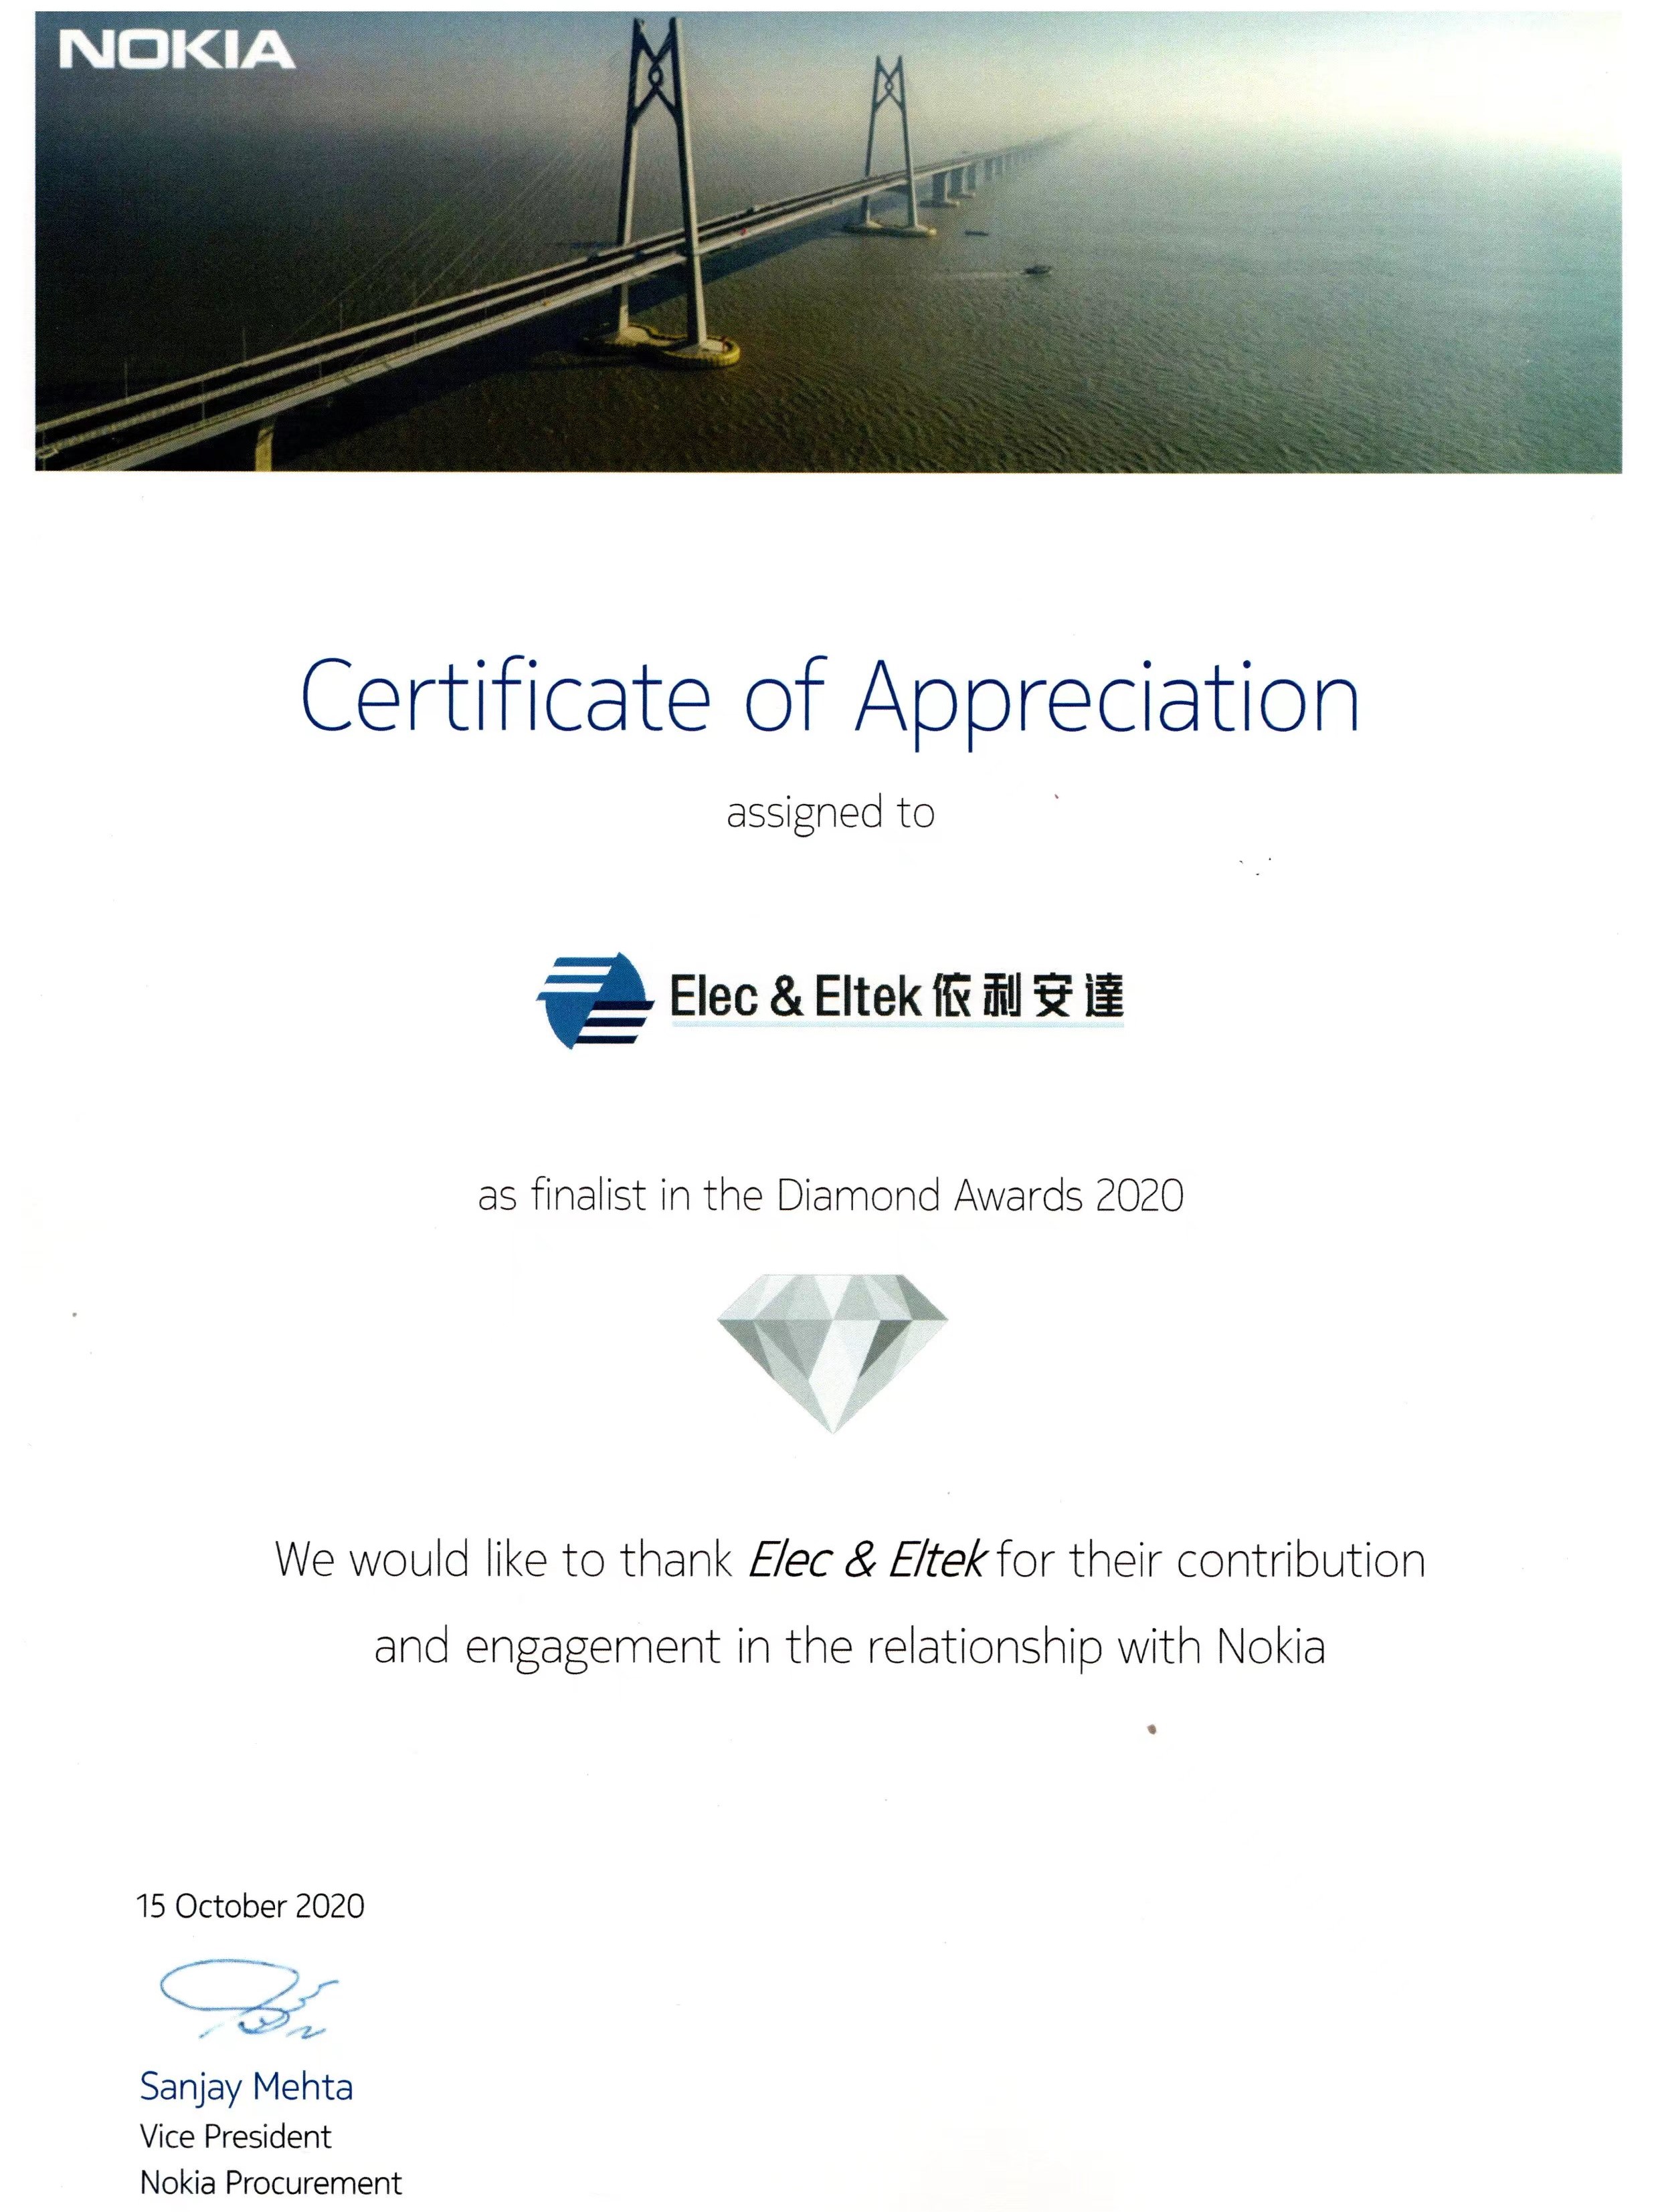 Nokia Certificate of Appreciation